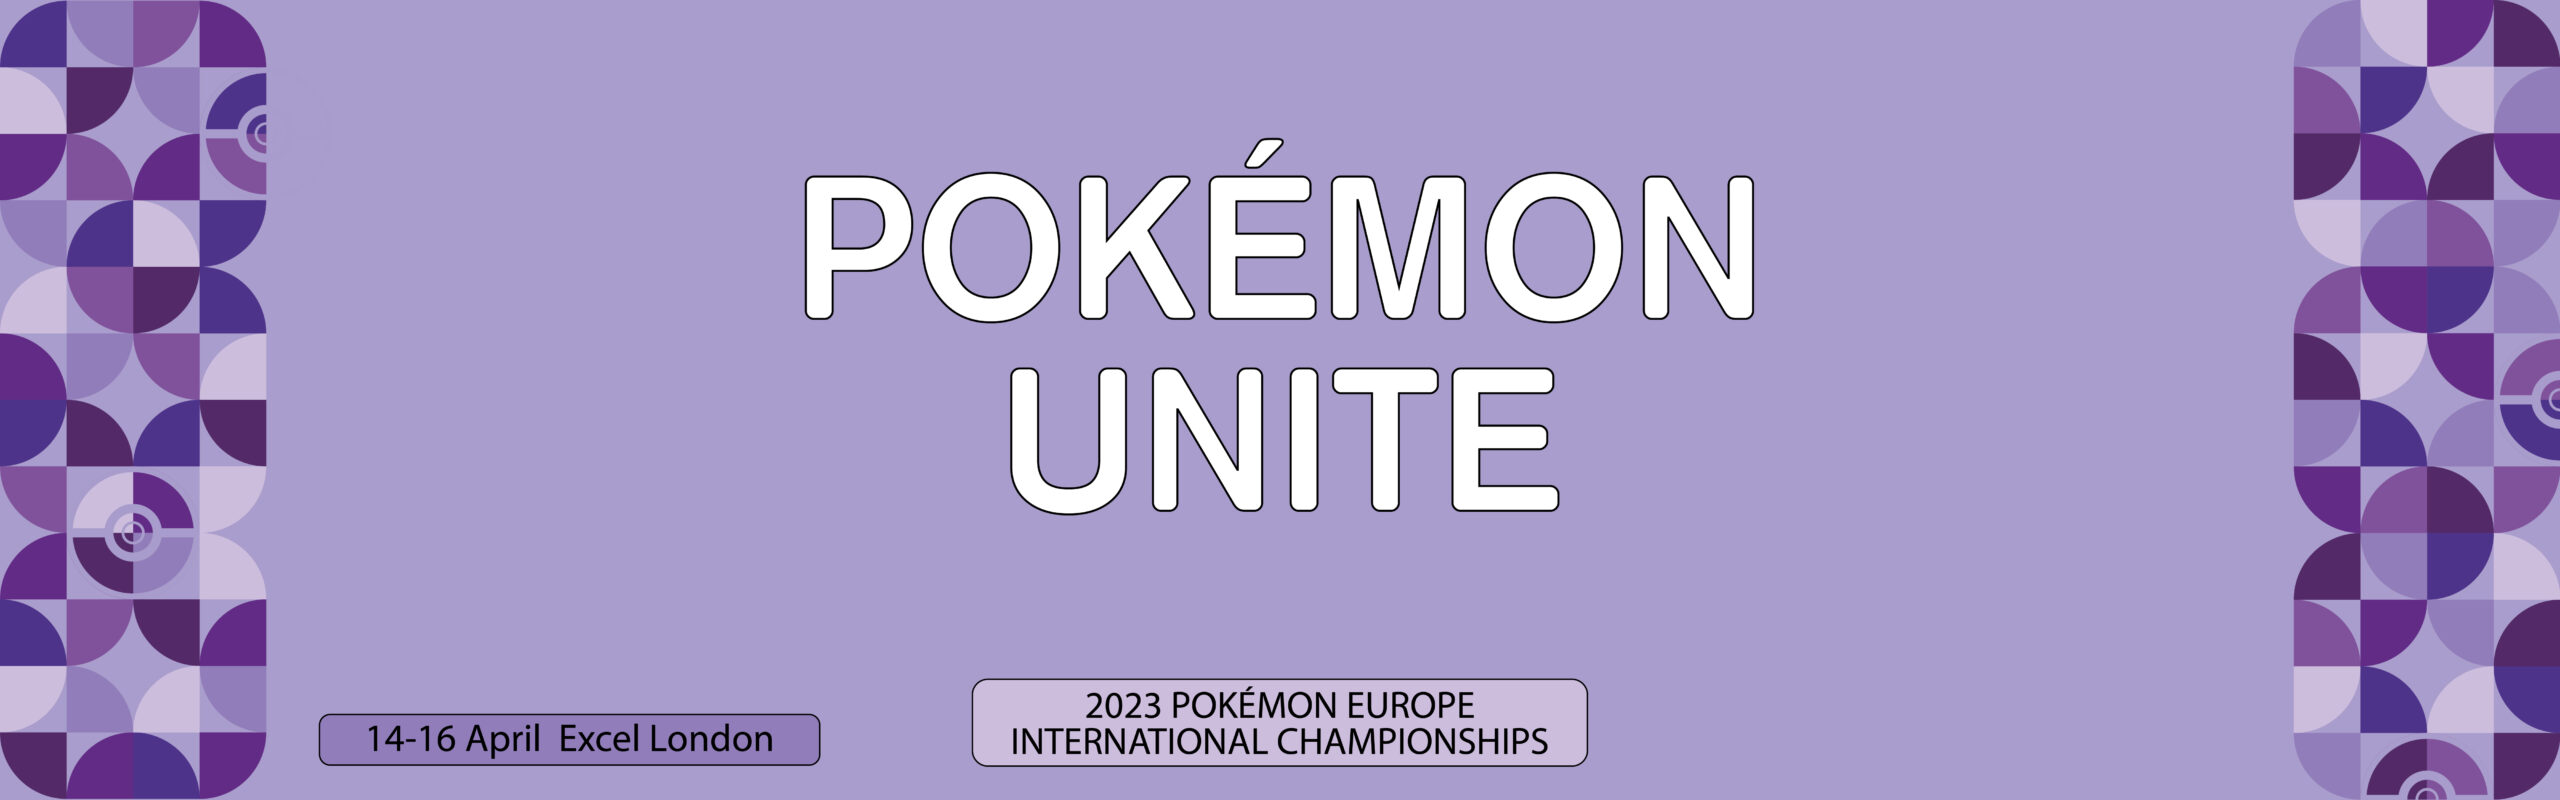 EUIC Pokémon Unite Main event Schedule